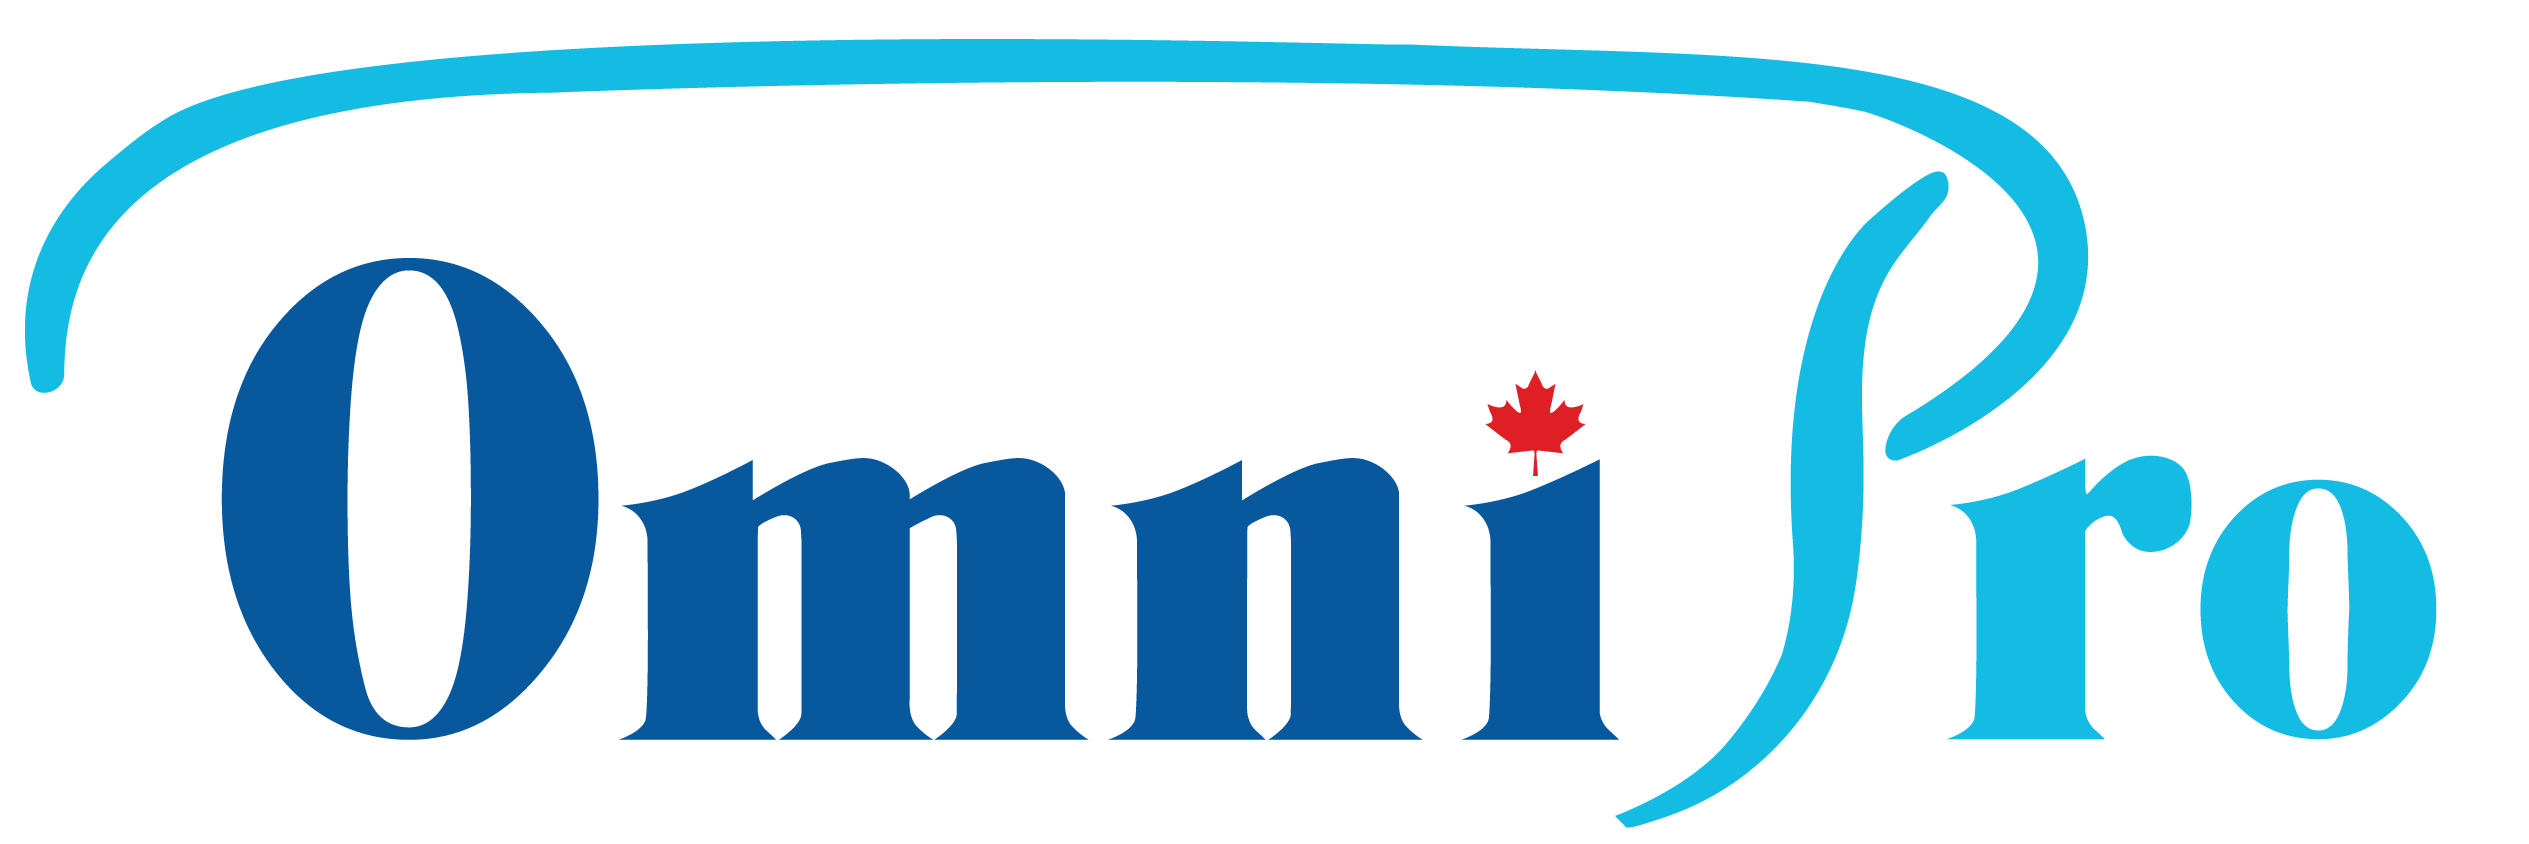 OMNI Provincial Electronics Inc.